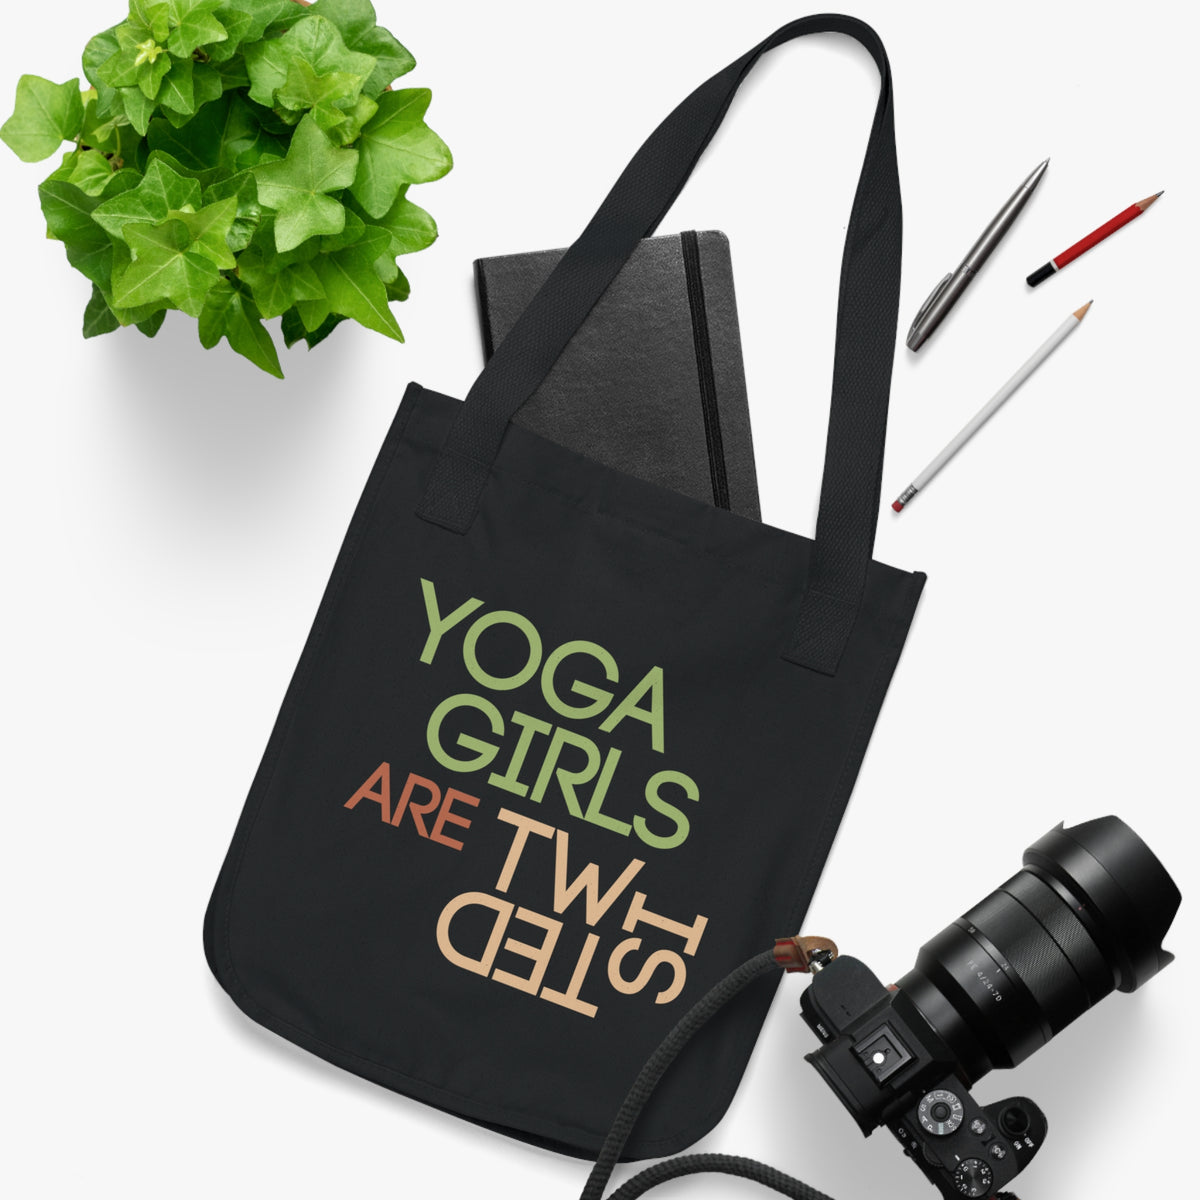 Yoga Girls Are Twisted Funny Yoga Shirt, Yoga Lovers Gift